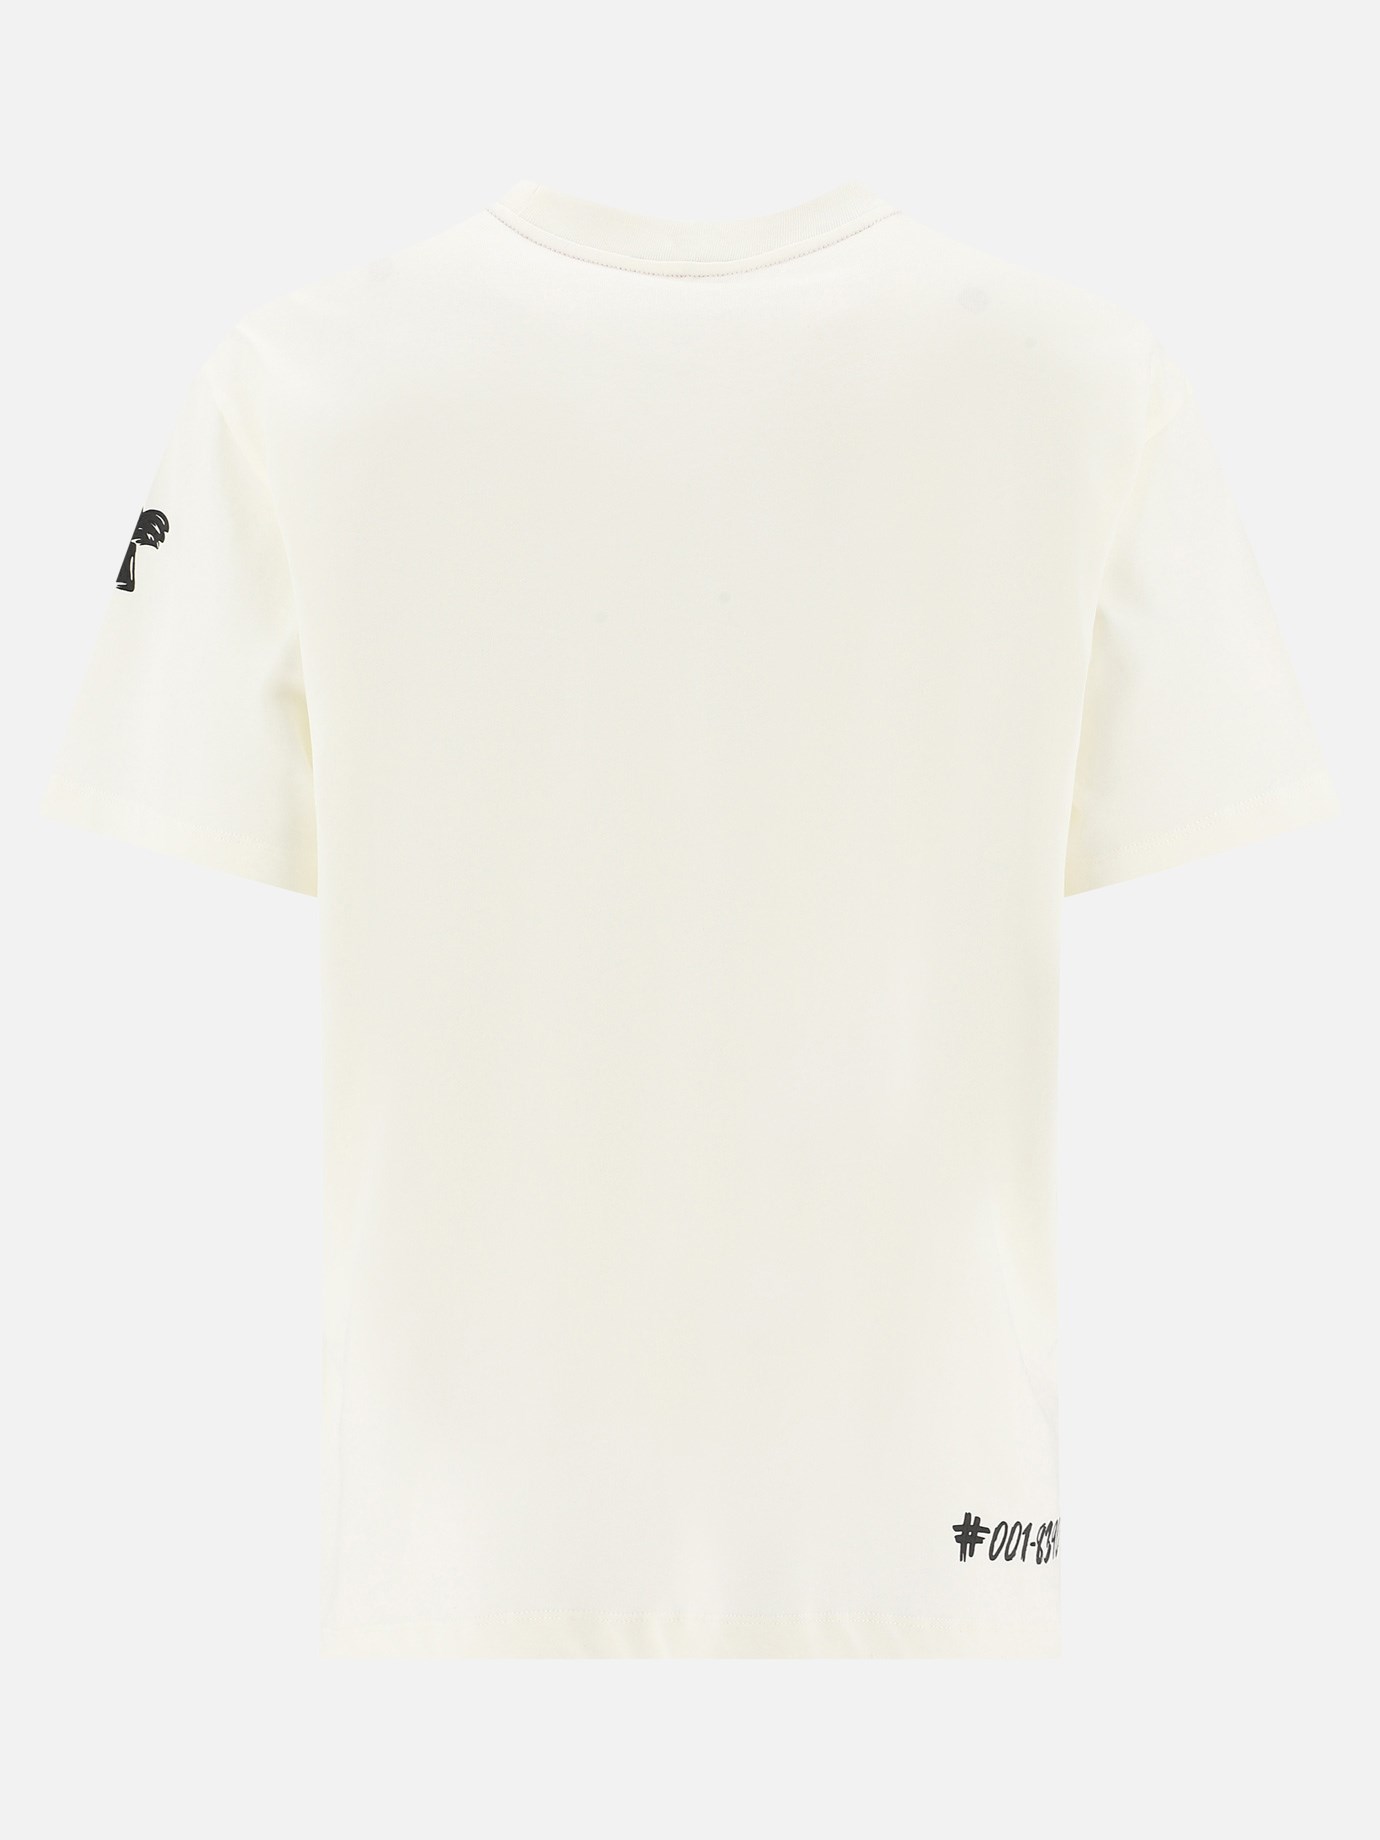  #MONCLER GRENOBLE  t-shirt by Moncler Grenoble